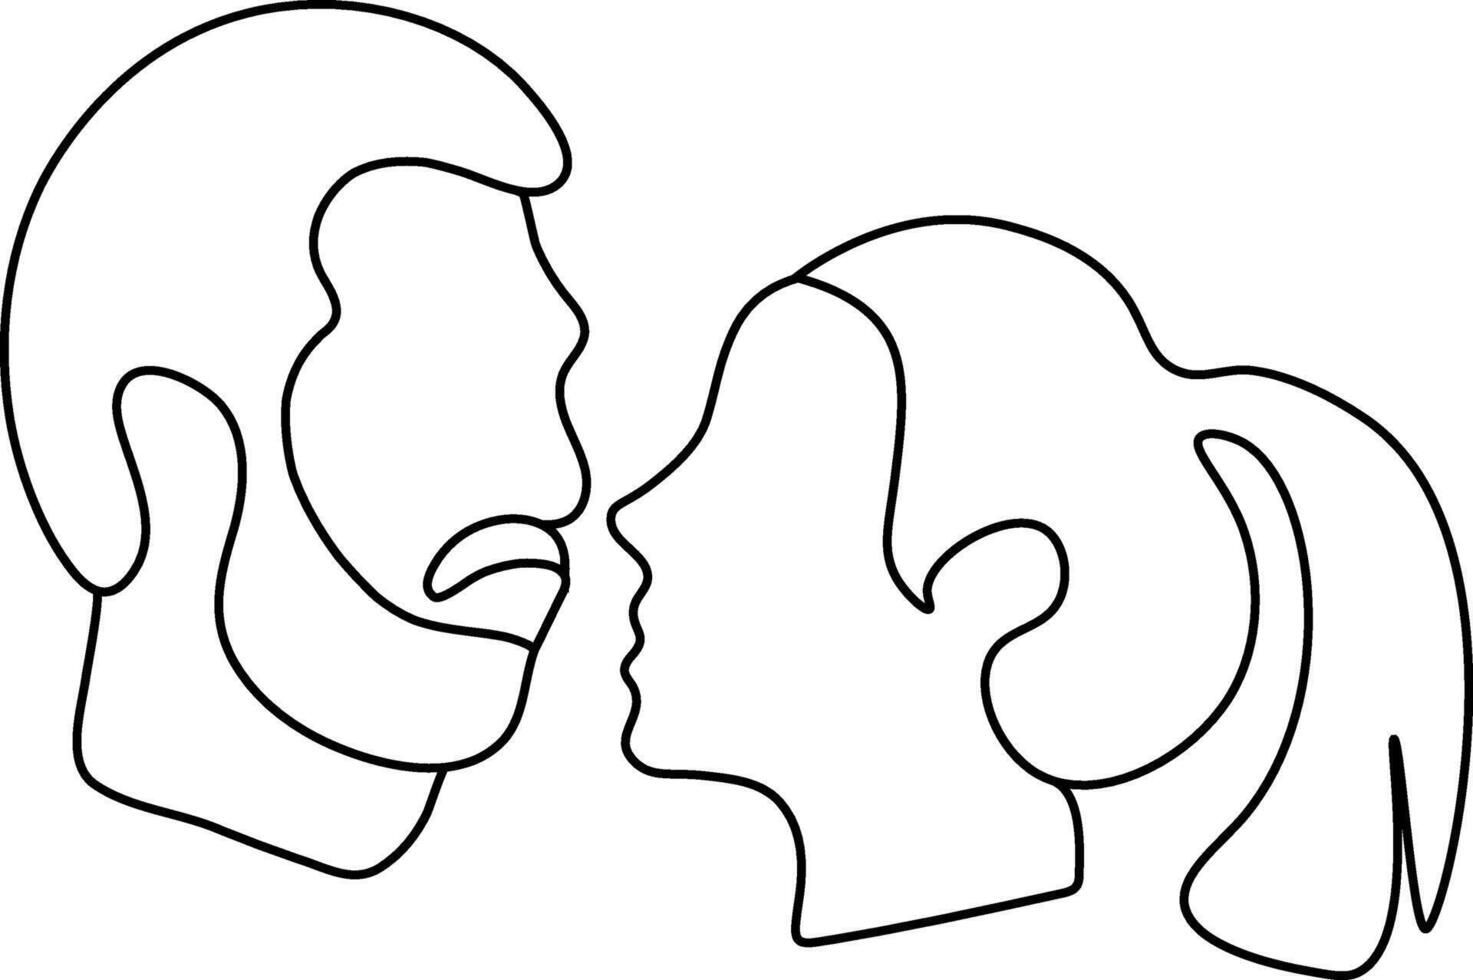 homme et femme visage à visage plat vecteur icône ligne dessin style illustration